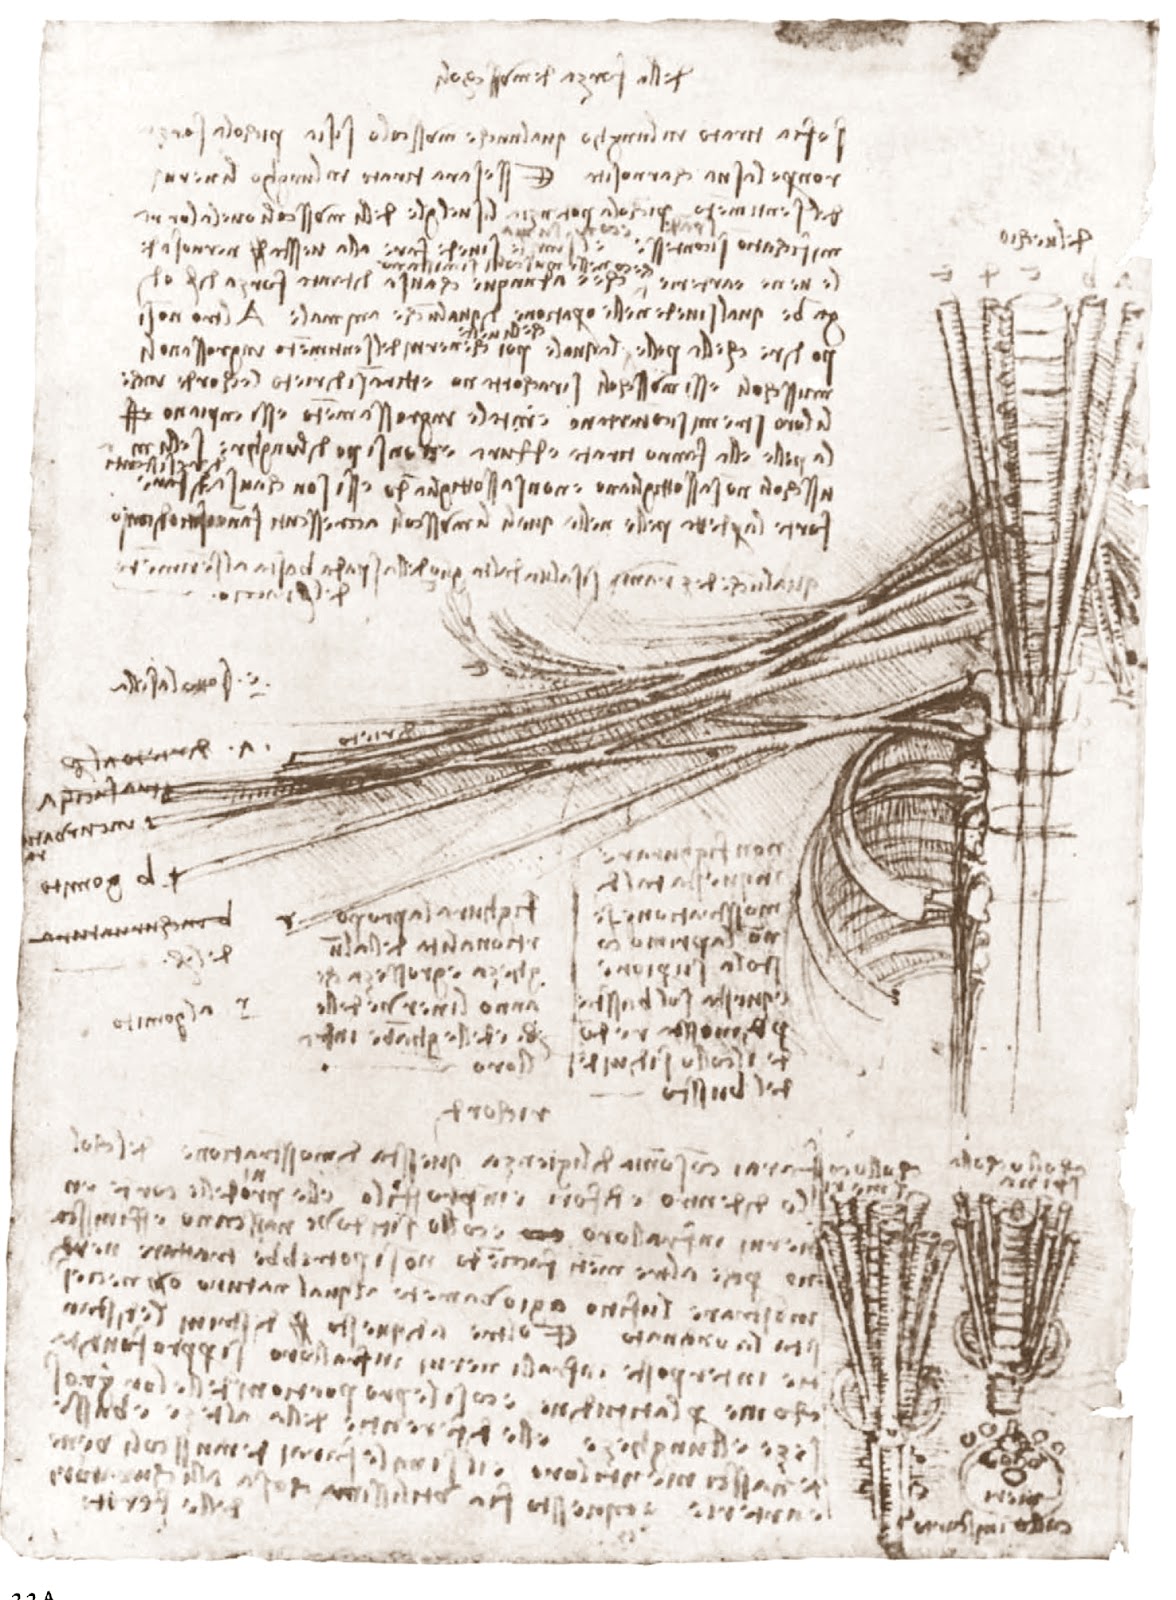 Leonardo+da+Vinci-1452-1519 (784).jpg